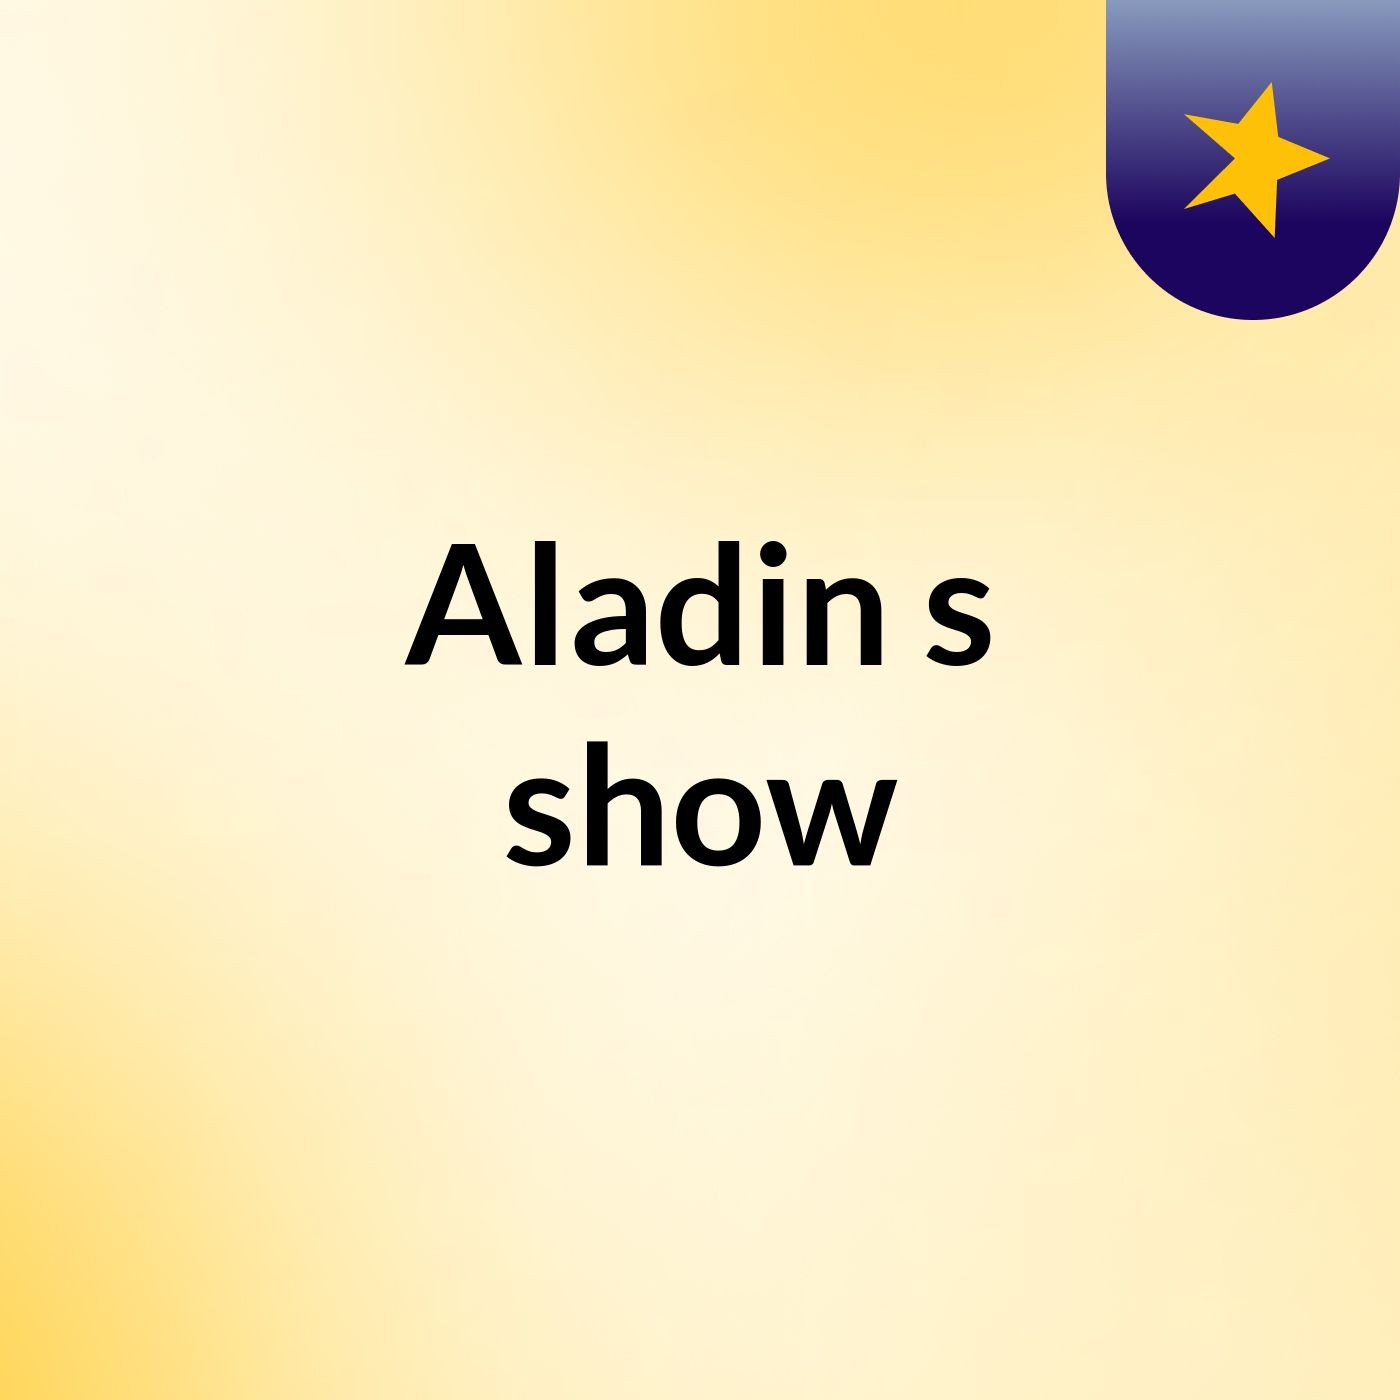 Aladin's show